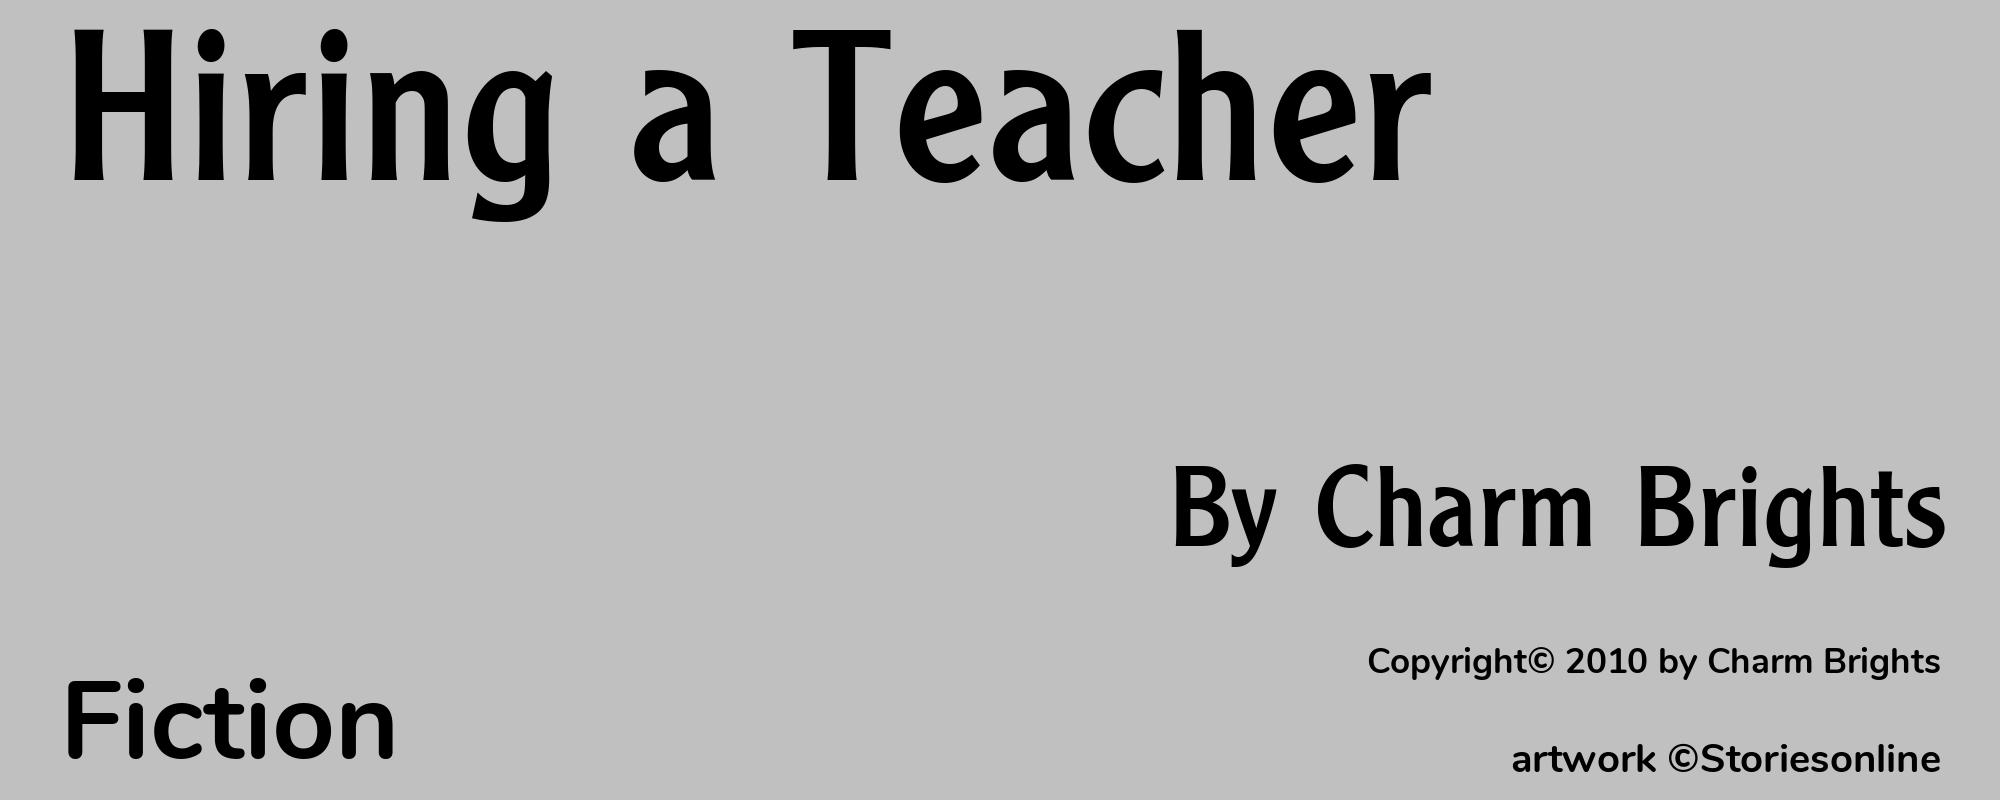 Hiring a Teacher - Cover